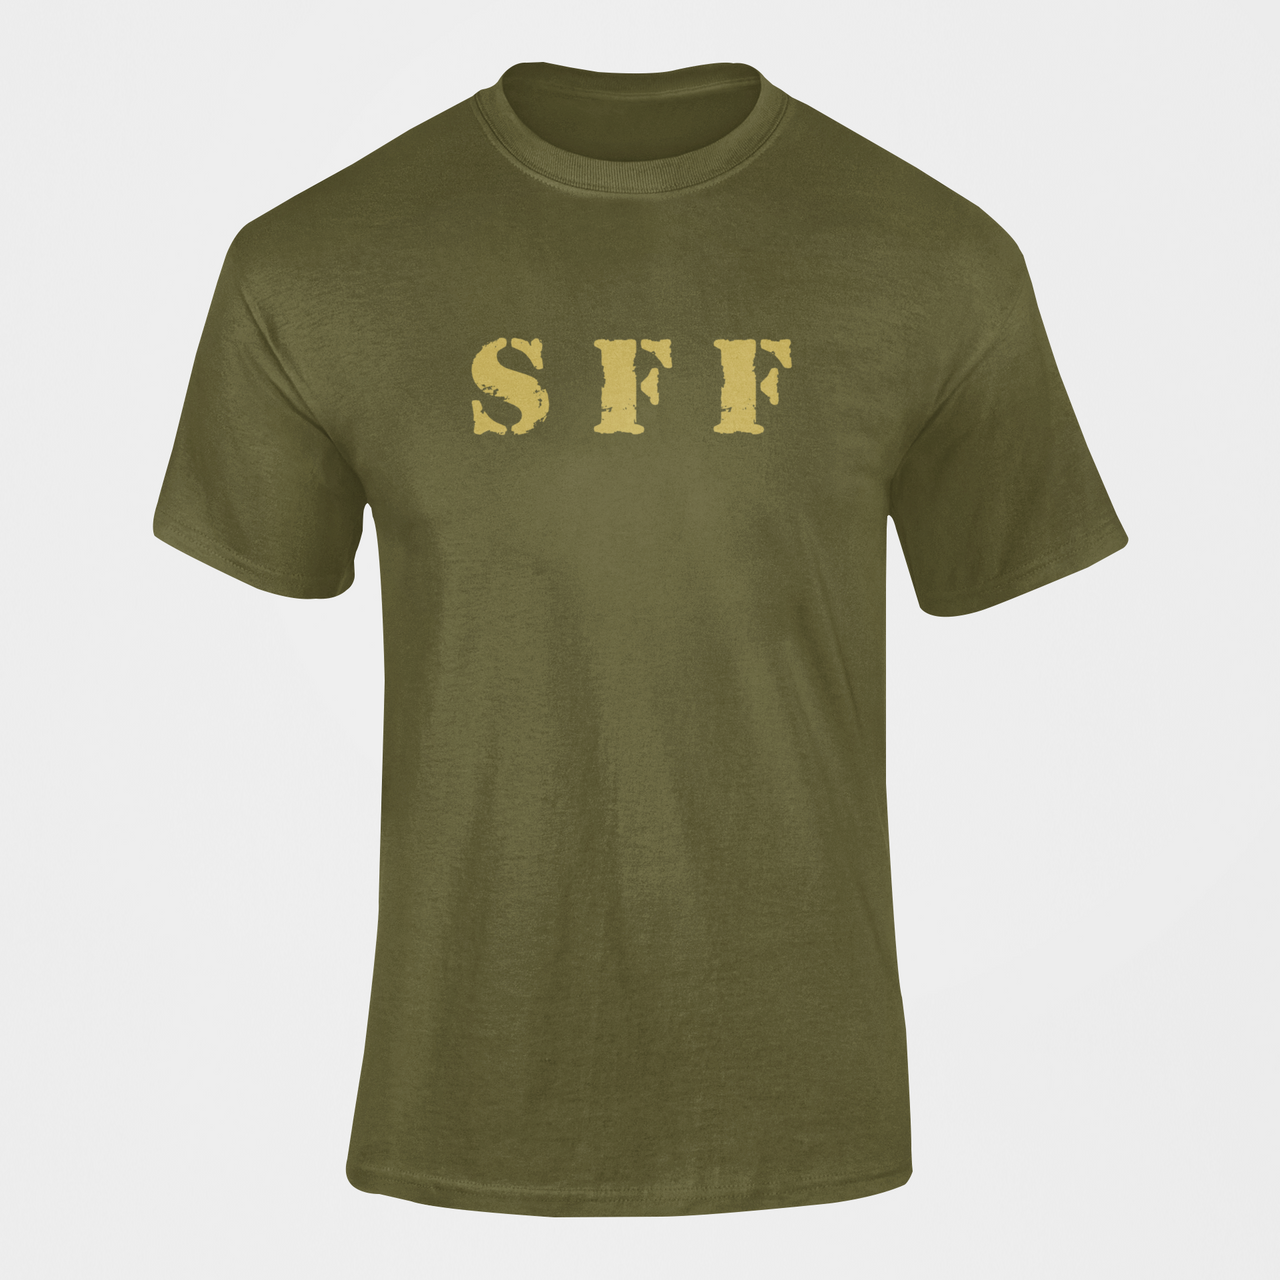 Army T-shirt - SFF (Men)